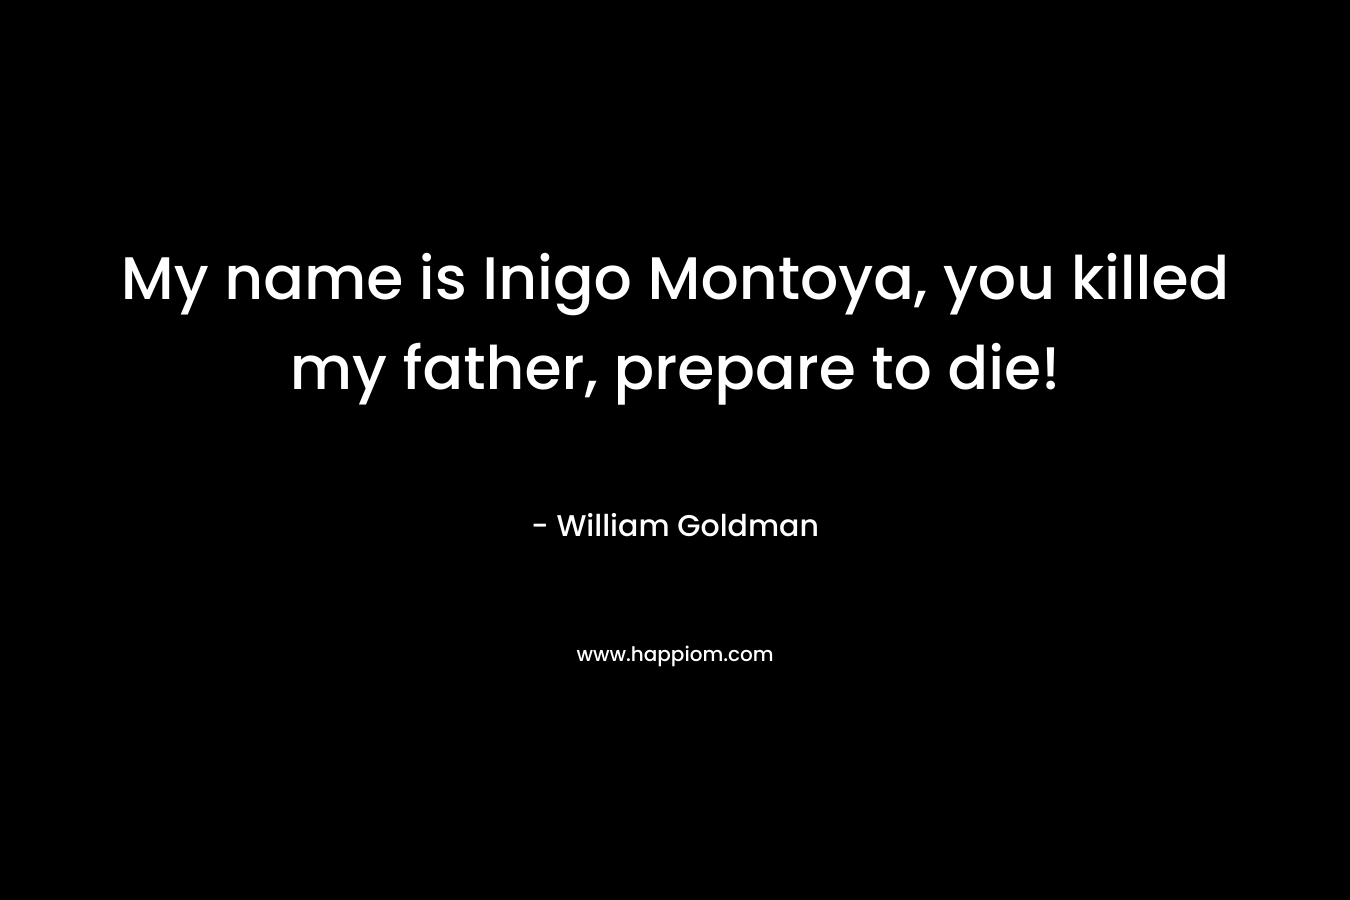 My name is Inigo Montoya, you killed my father, prepare to die!